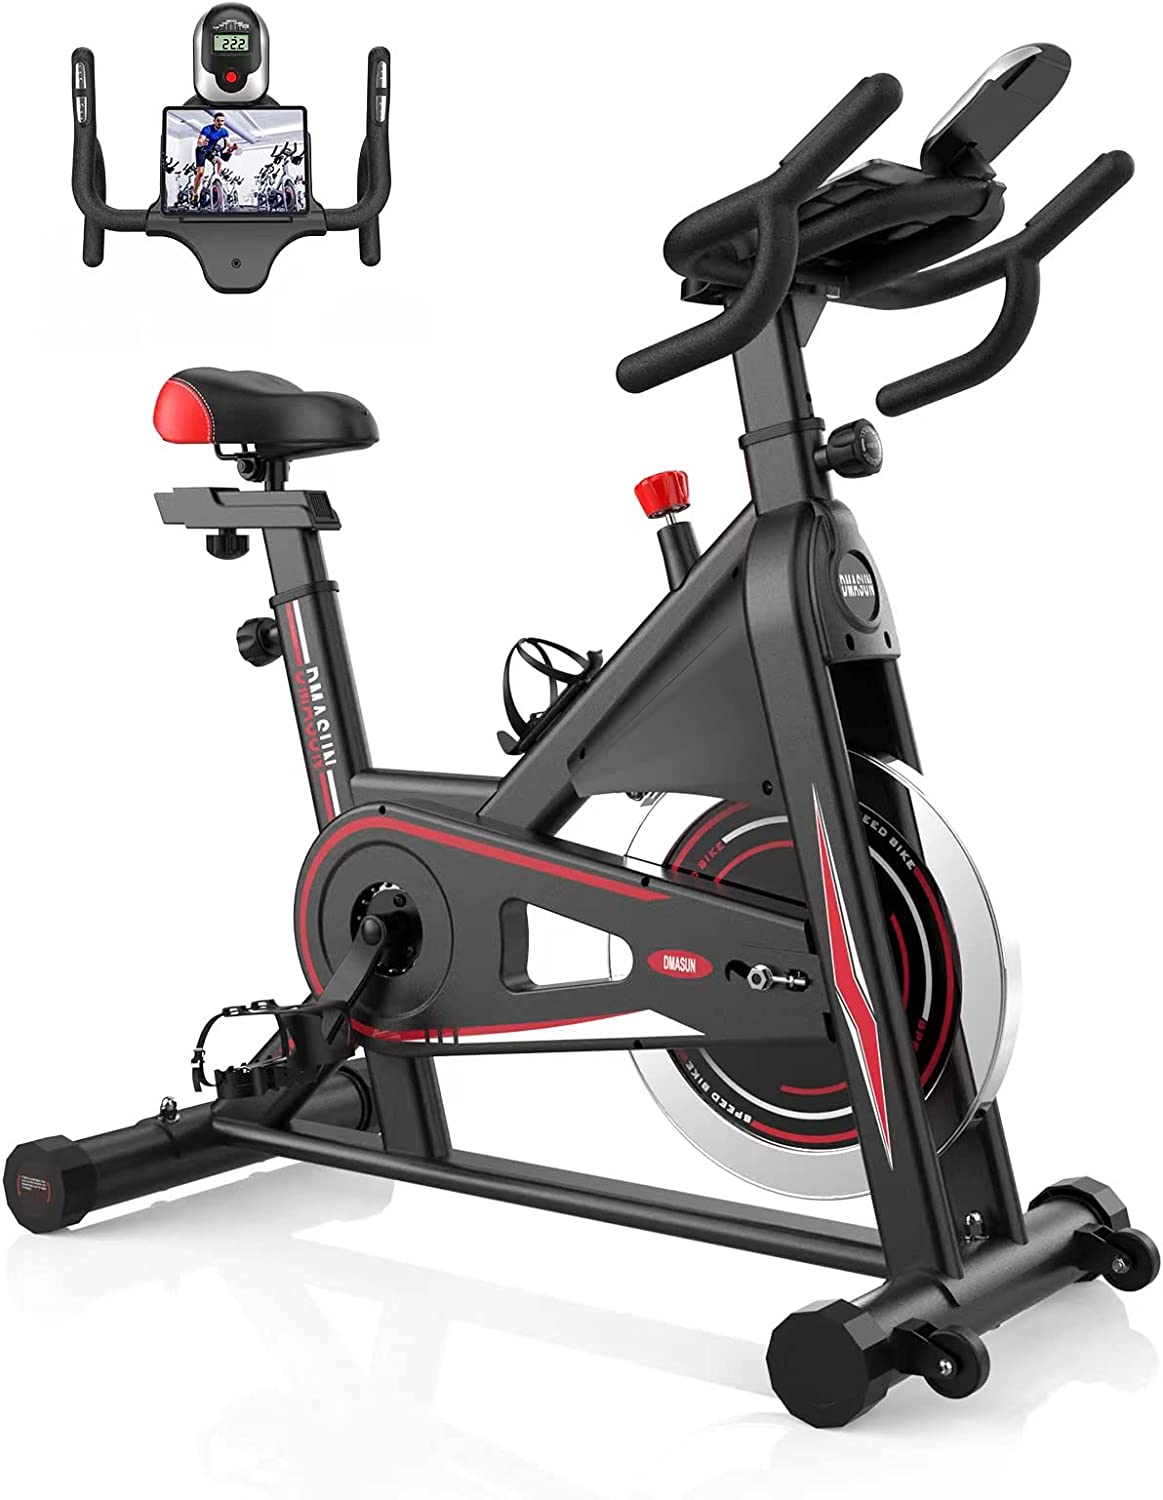 DMASUN Magnetic Resistance Pro Indoor Cycling Bike, 350lbs Capacity